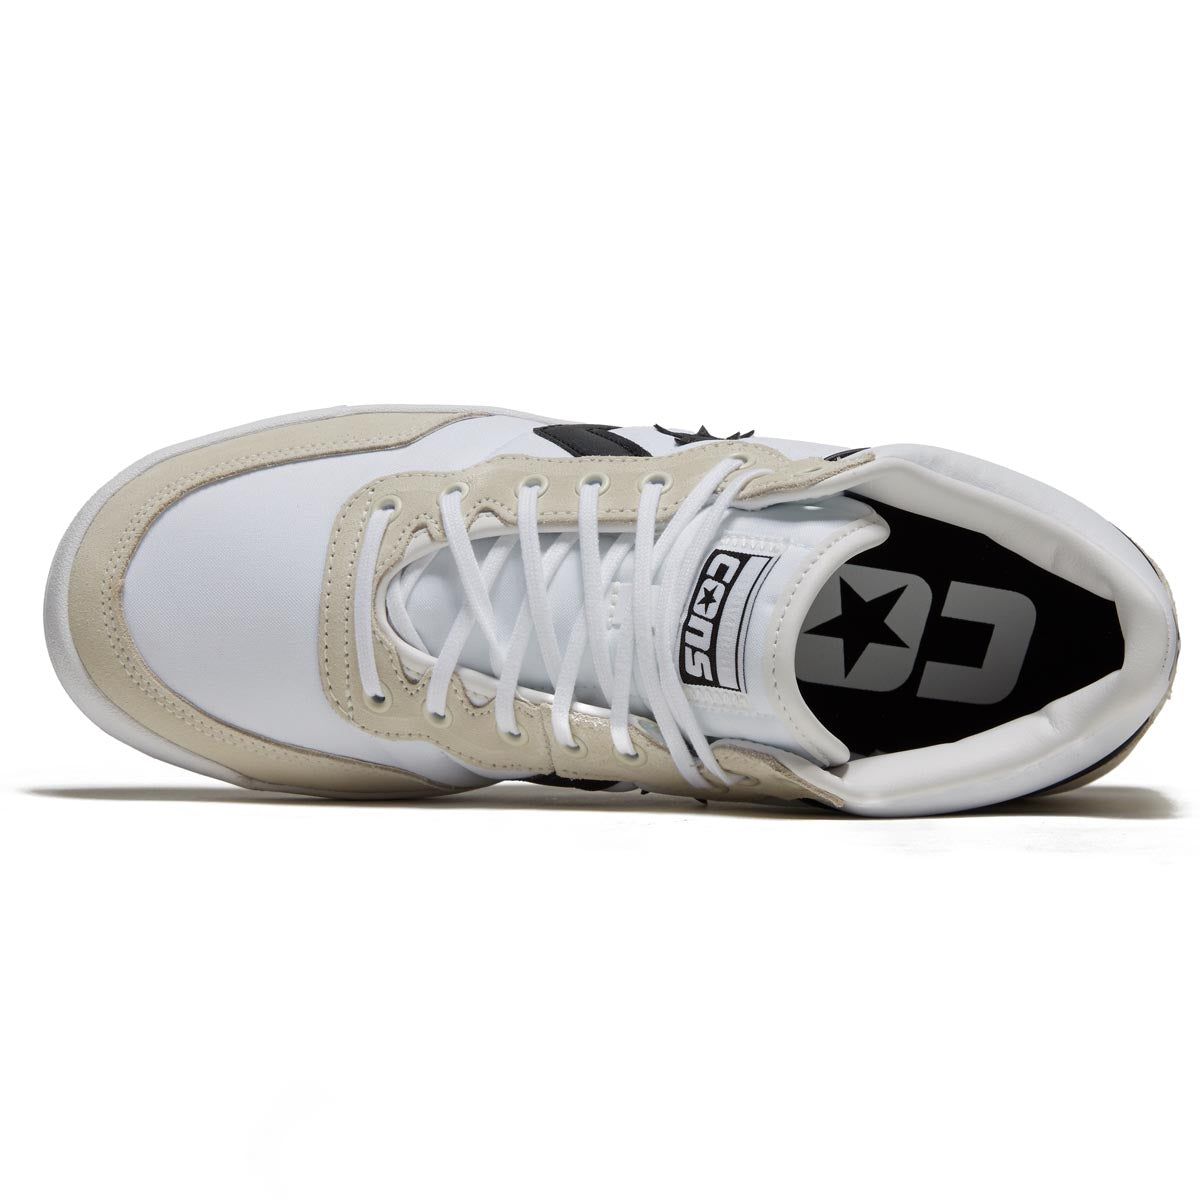 Converse Fastbreak Pro Mid Shoes - White/Black/Egret image 3